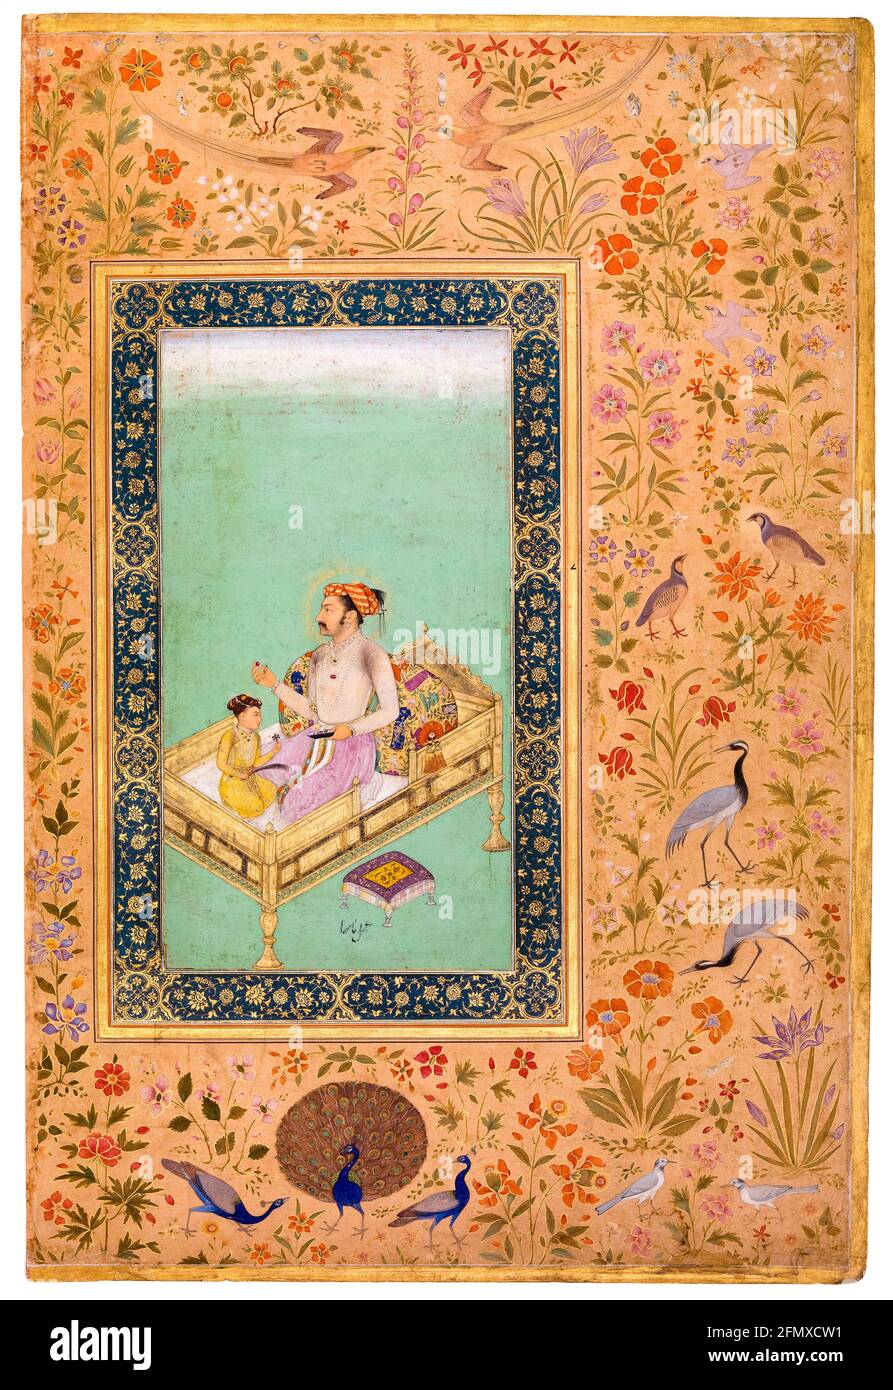 Empereur Shah Jahan (1592-1666), 5e empereur moghol et son fils Dara Shikoh (1615-1659), peinture, 1700-1799 Banque D'Images